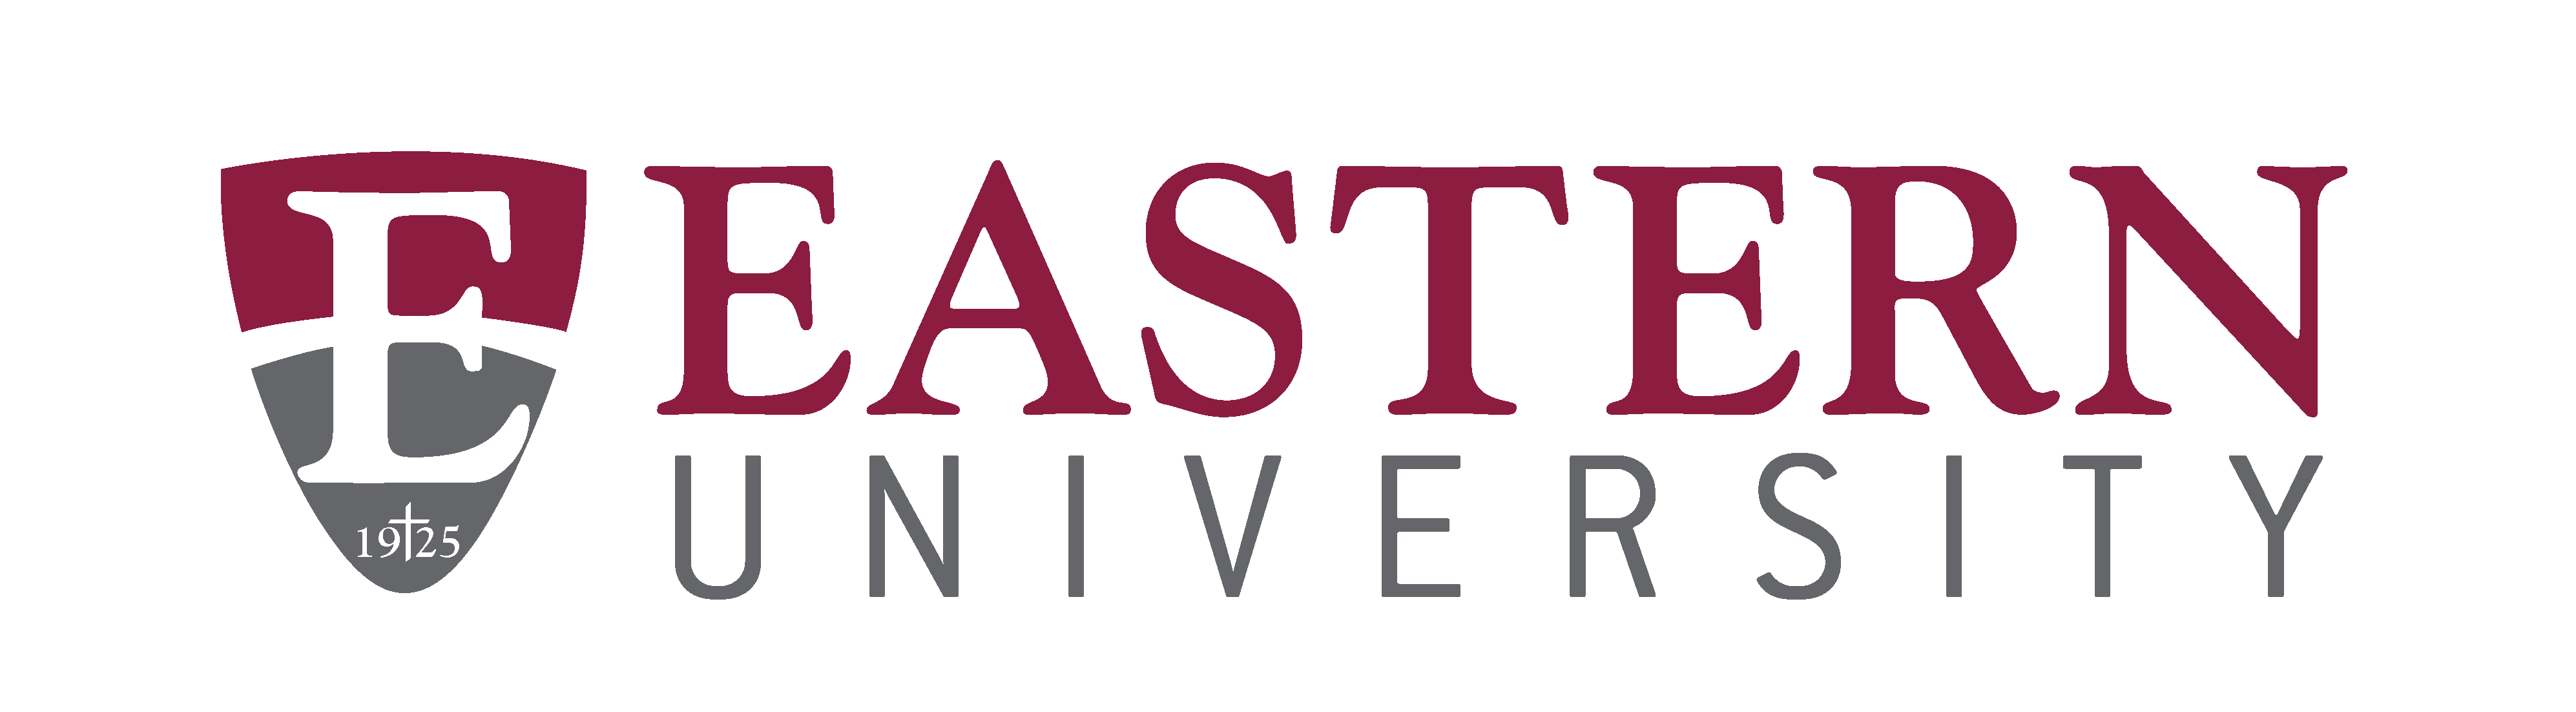 Eastern University logo